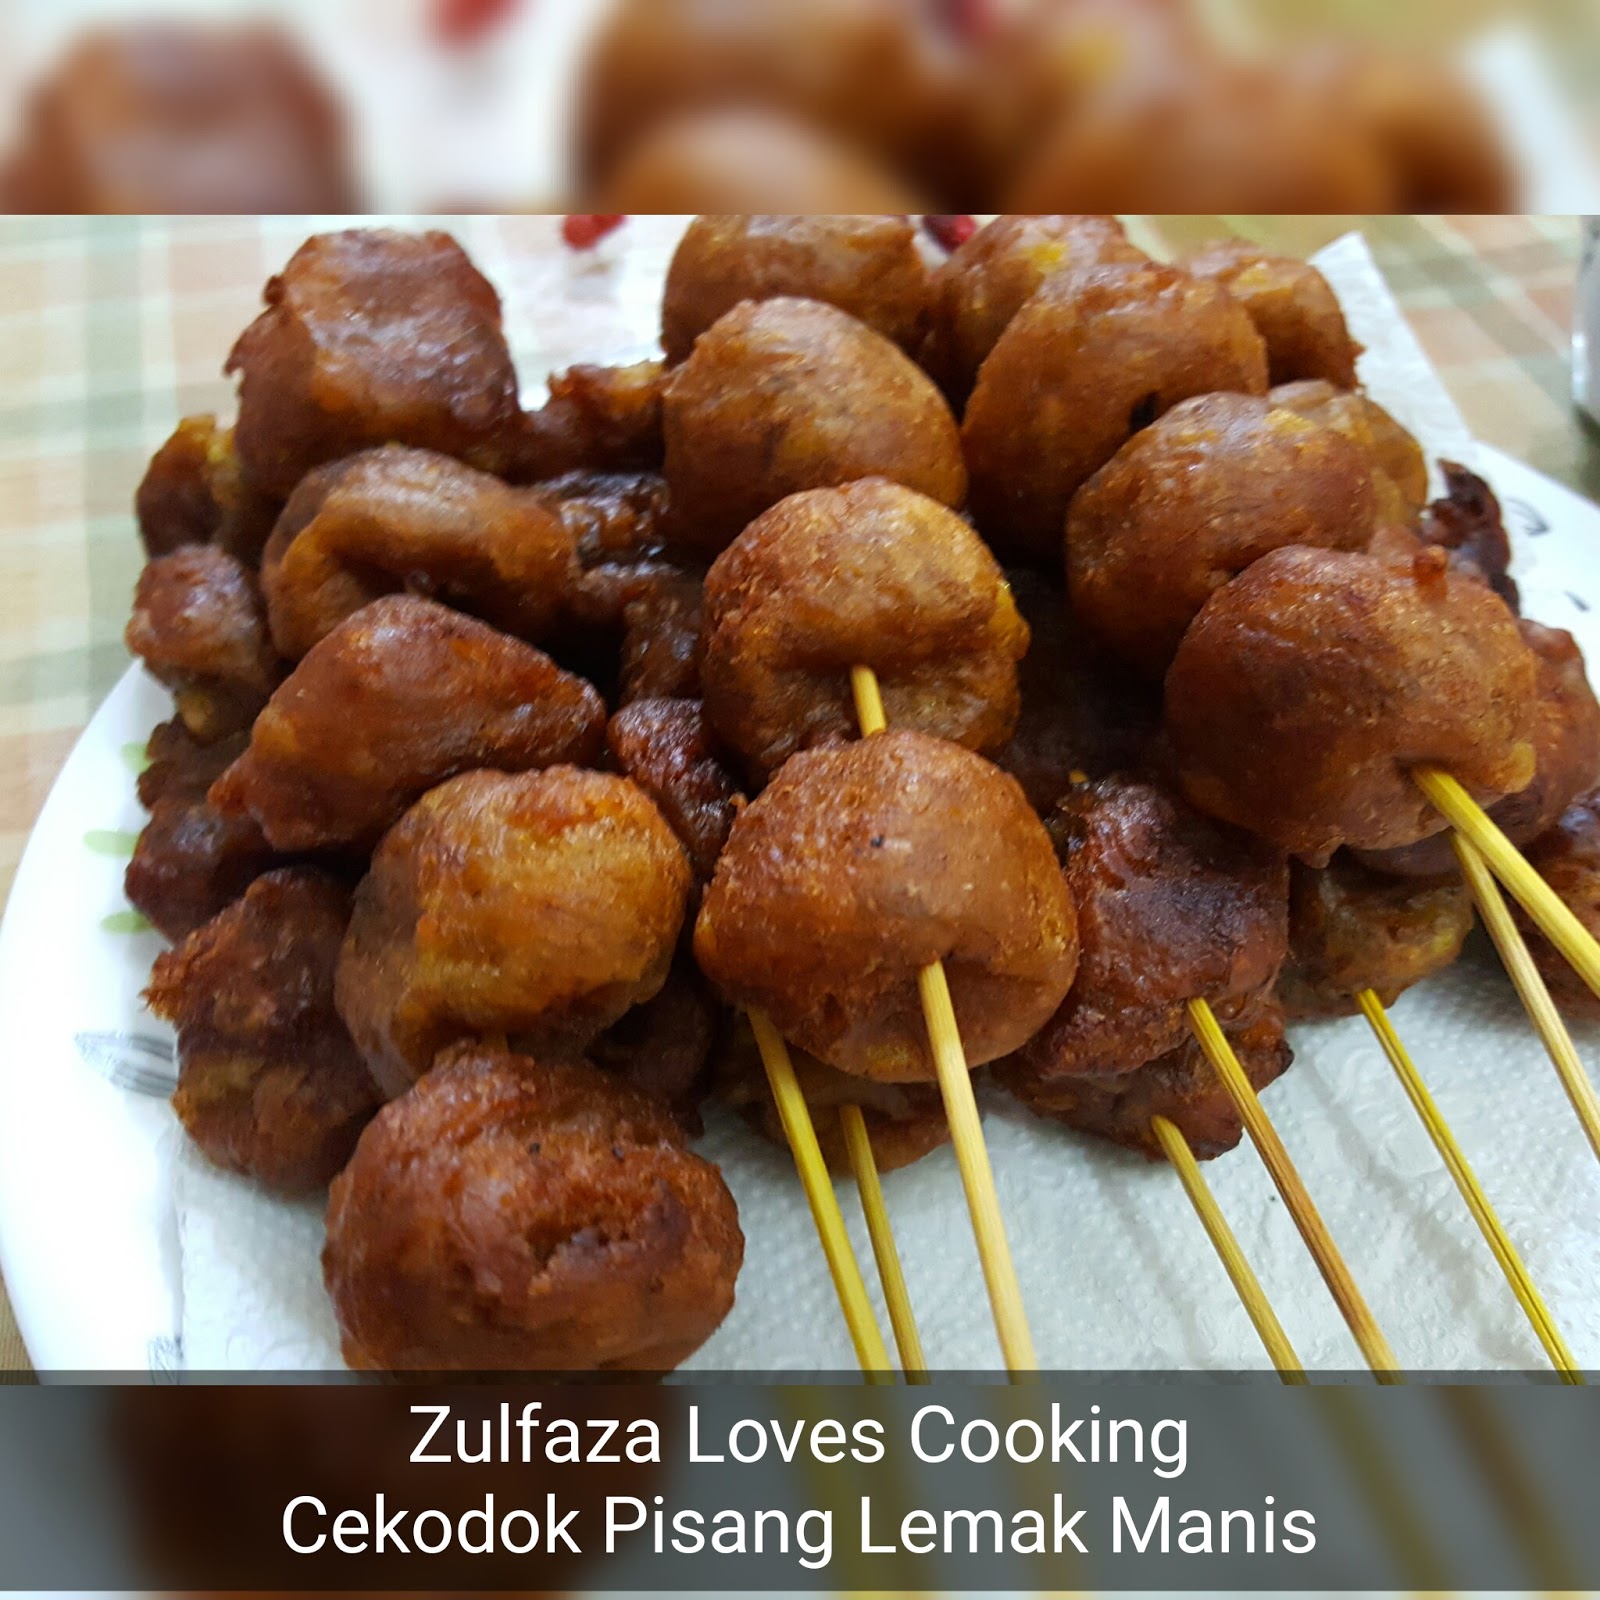 ZULFAZA LOVES COOKING: Cekodok Pisang Lemak Manis